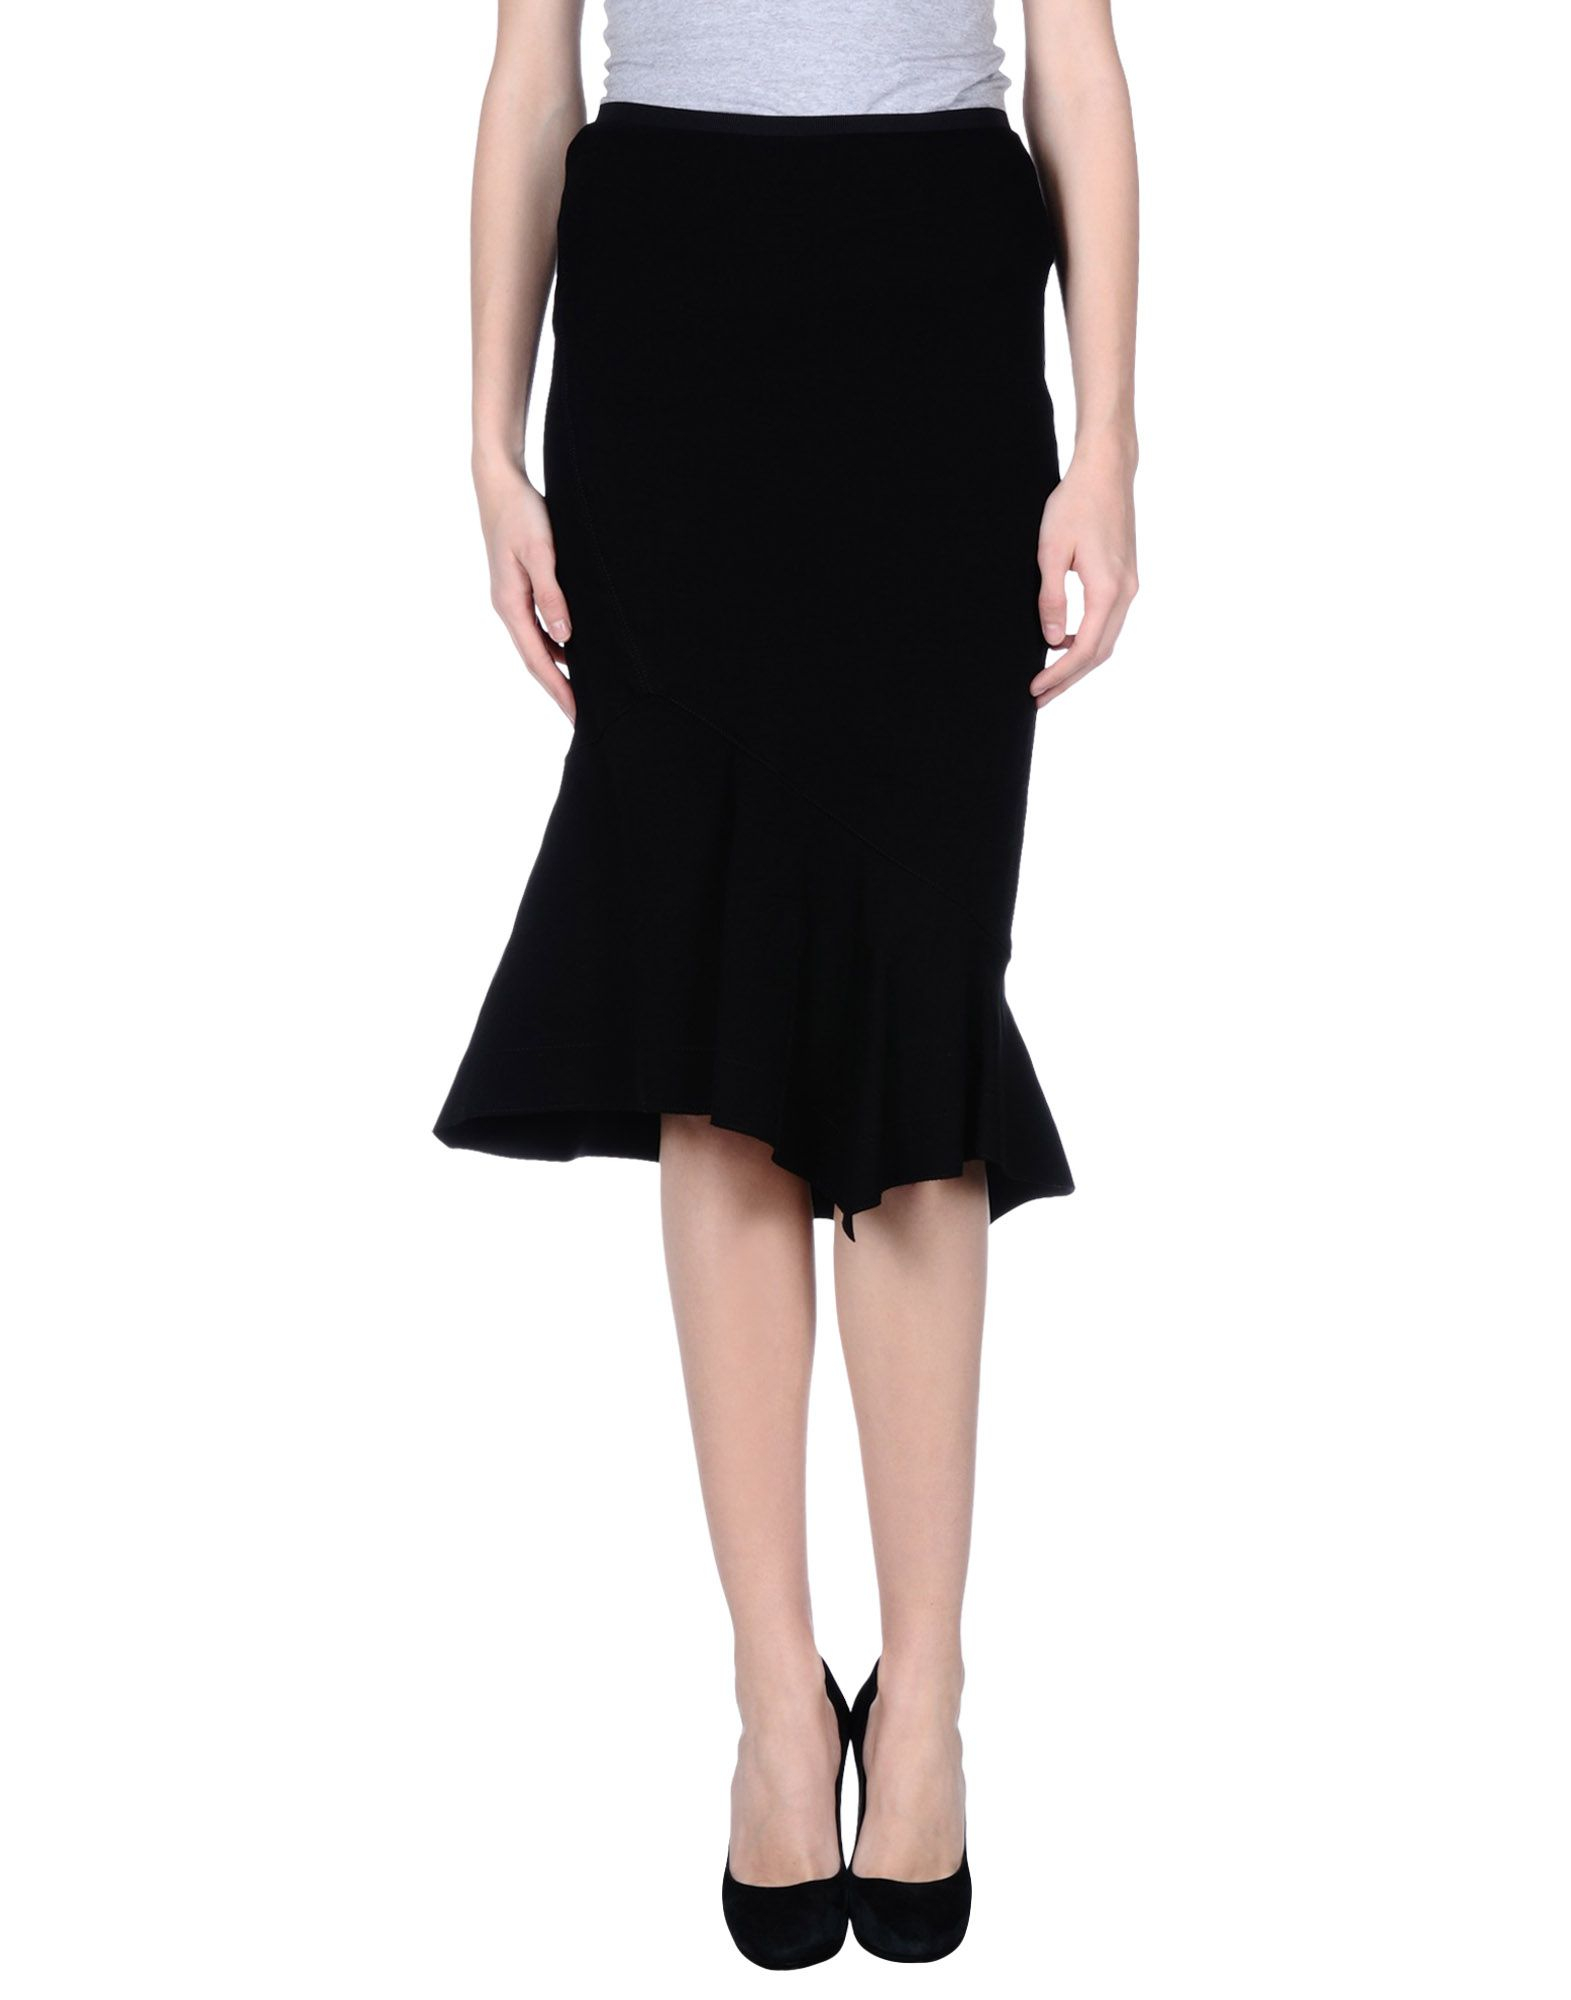 Donna karan 3/4 Length Skirt in Black | Lyst